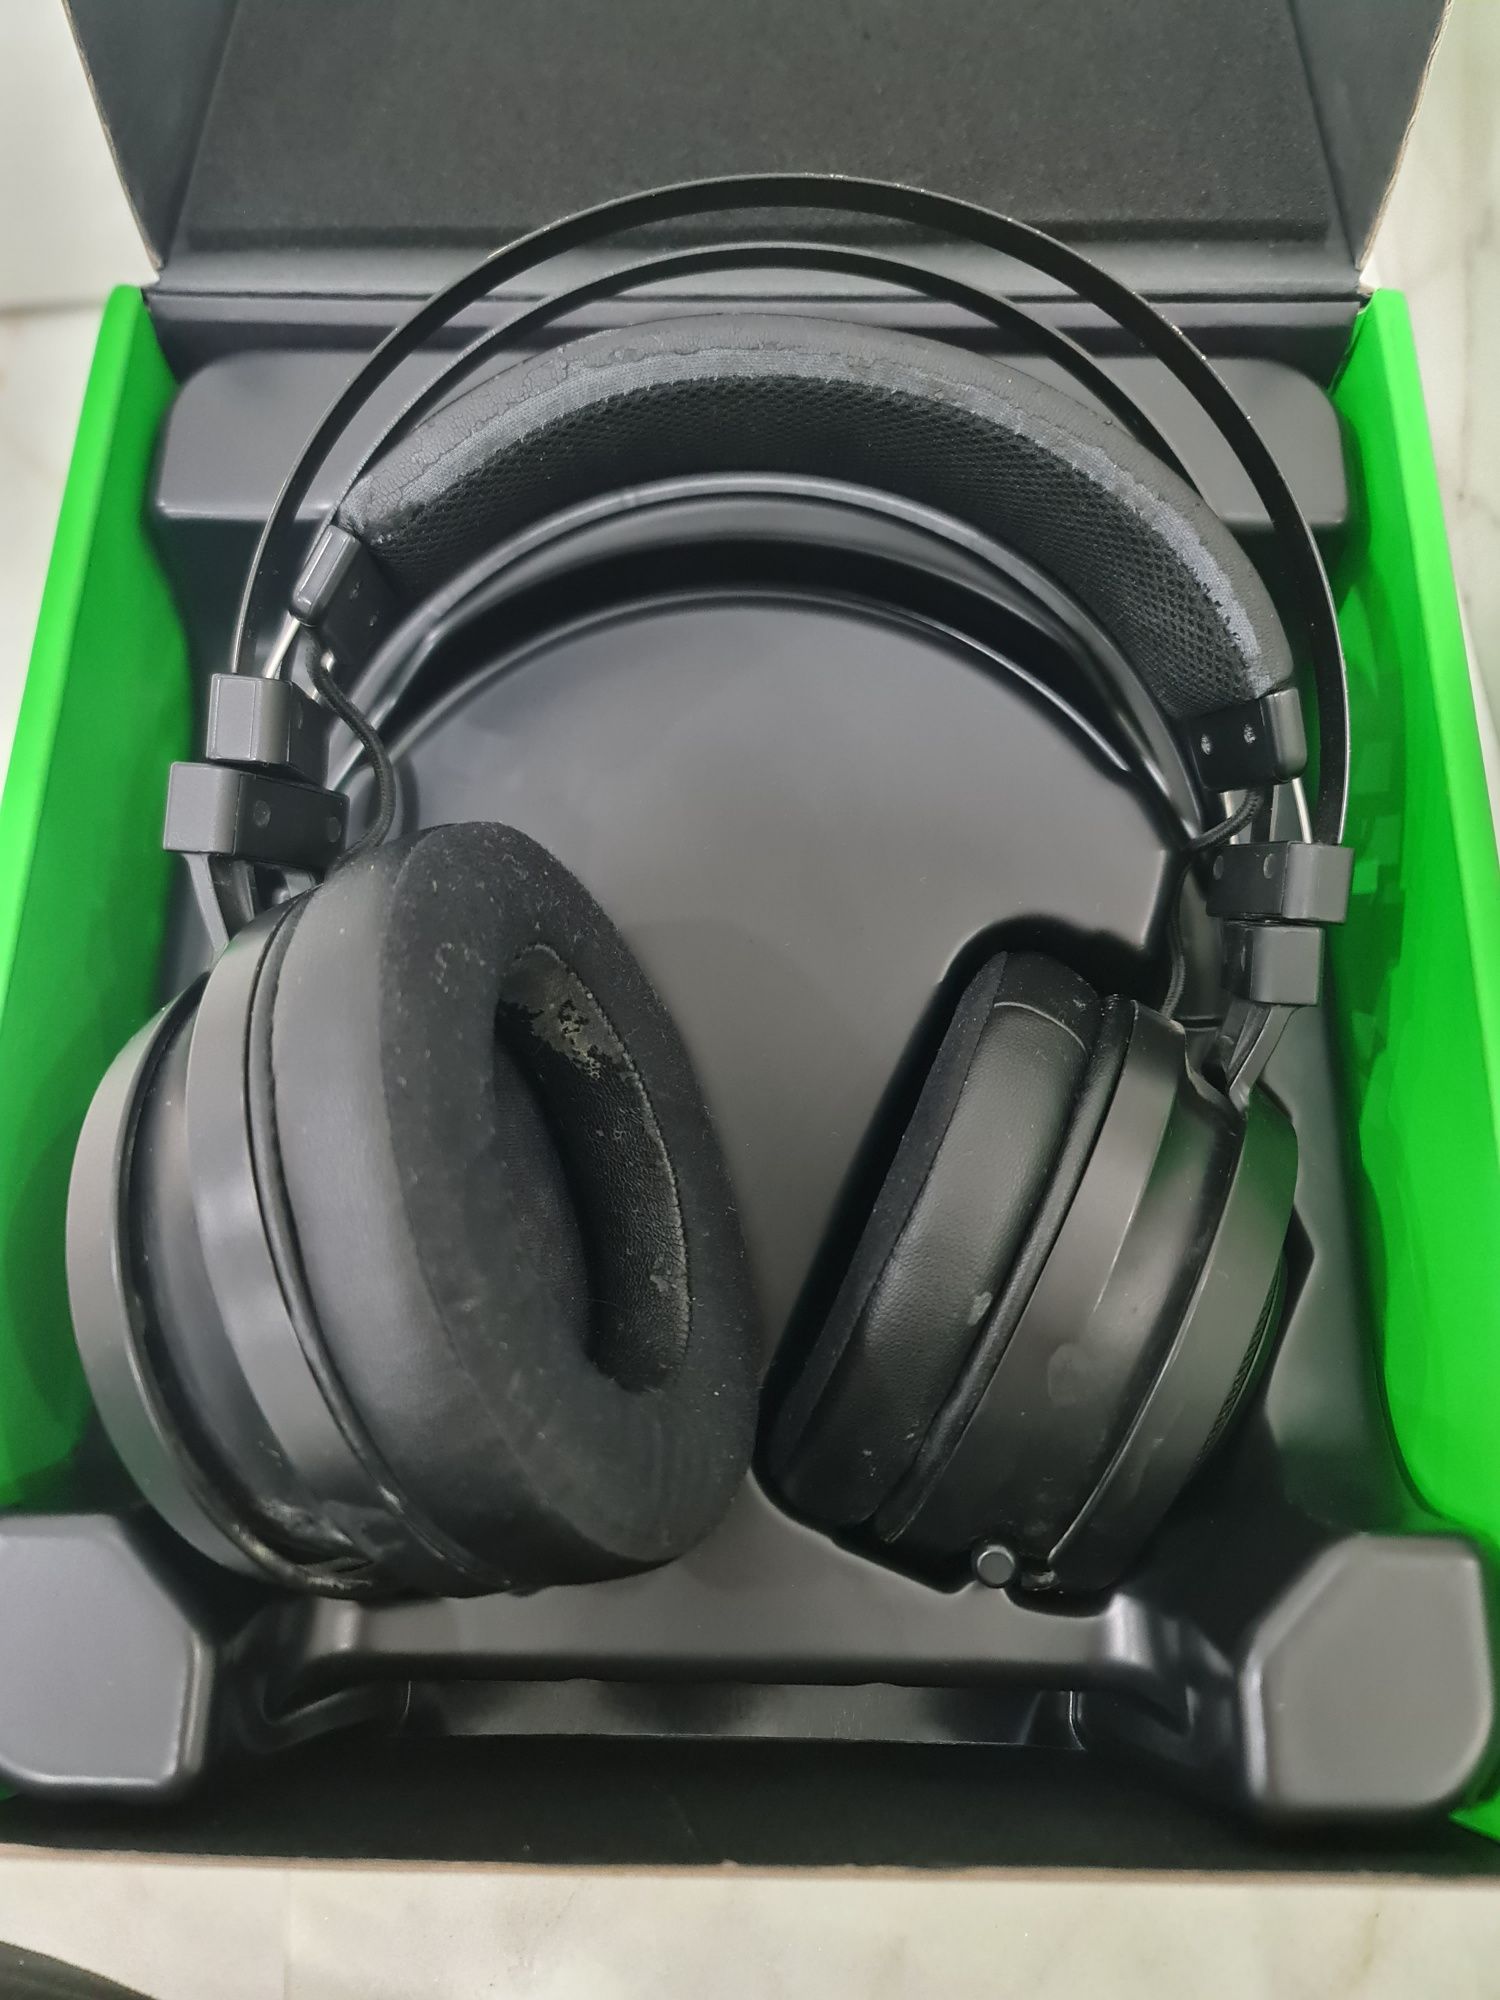 Razer Nari headset